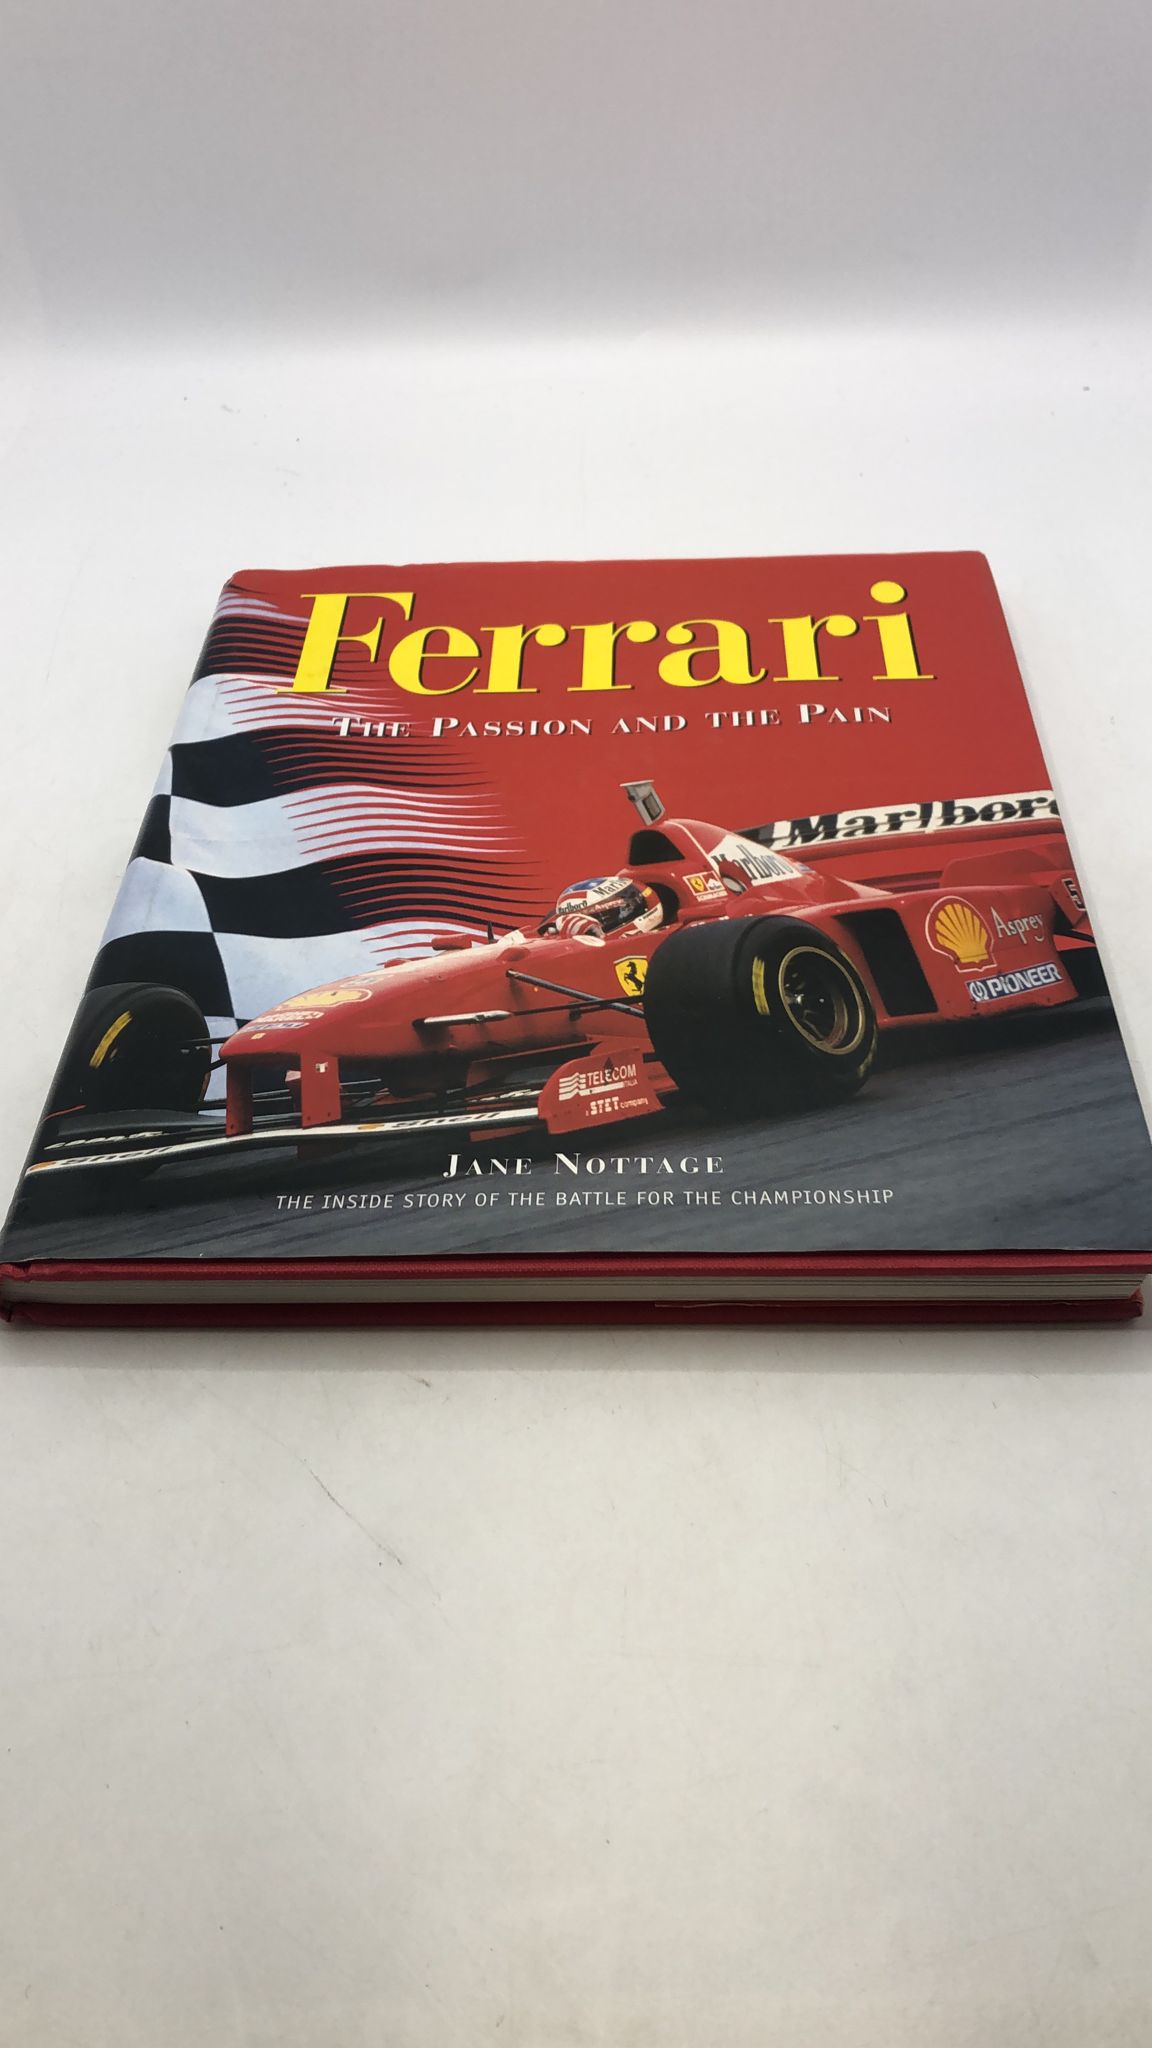 Libro in inglese: Ferrari The Passione and The pain